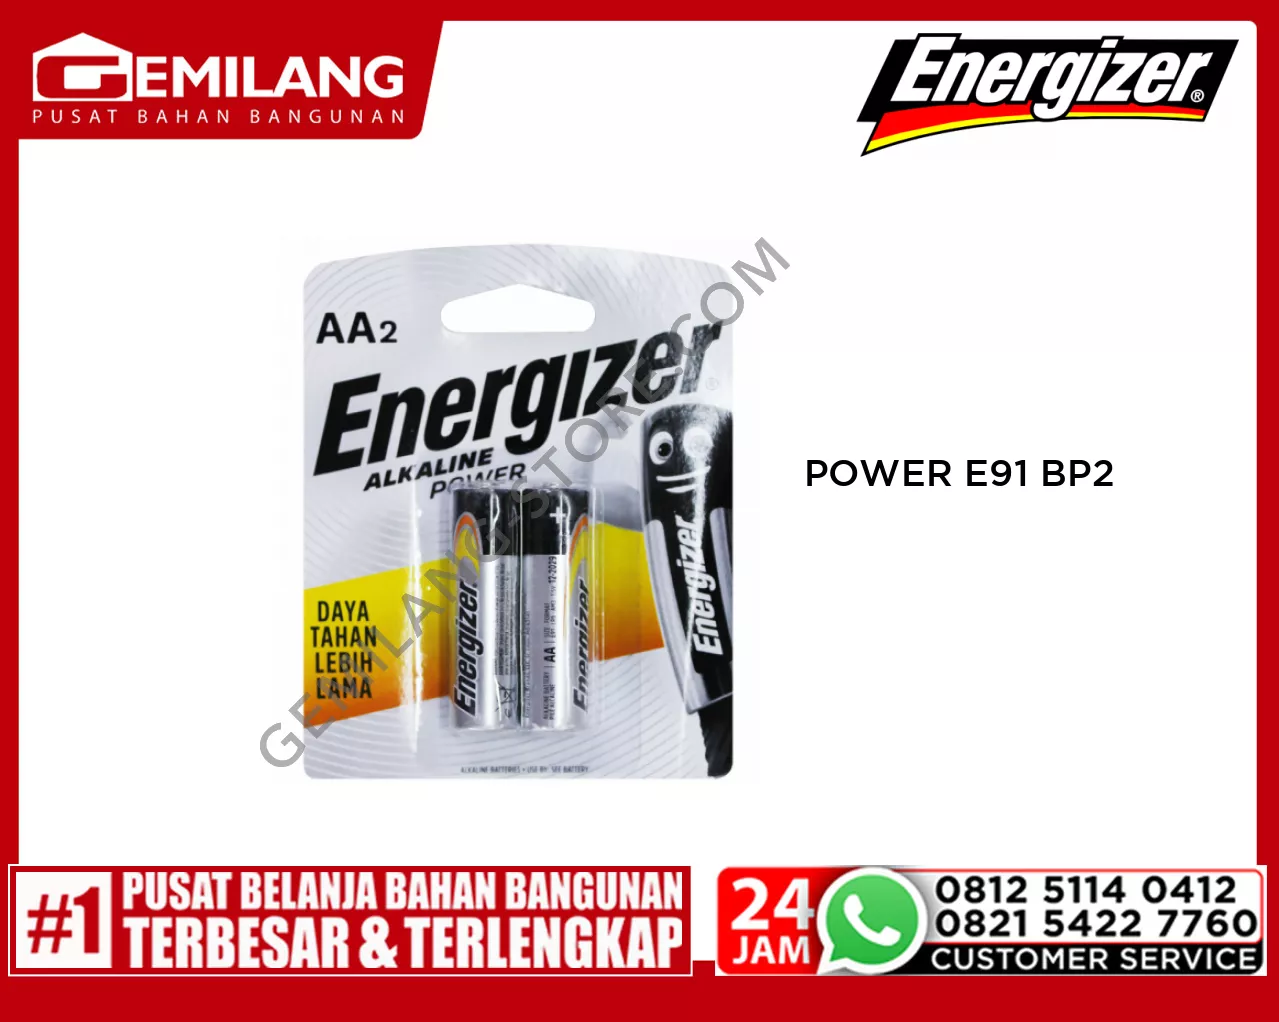 ENERGIZER POWER E91 BP2